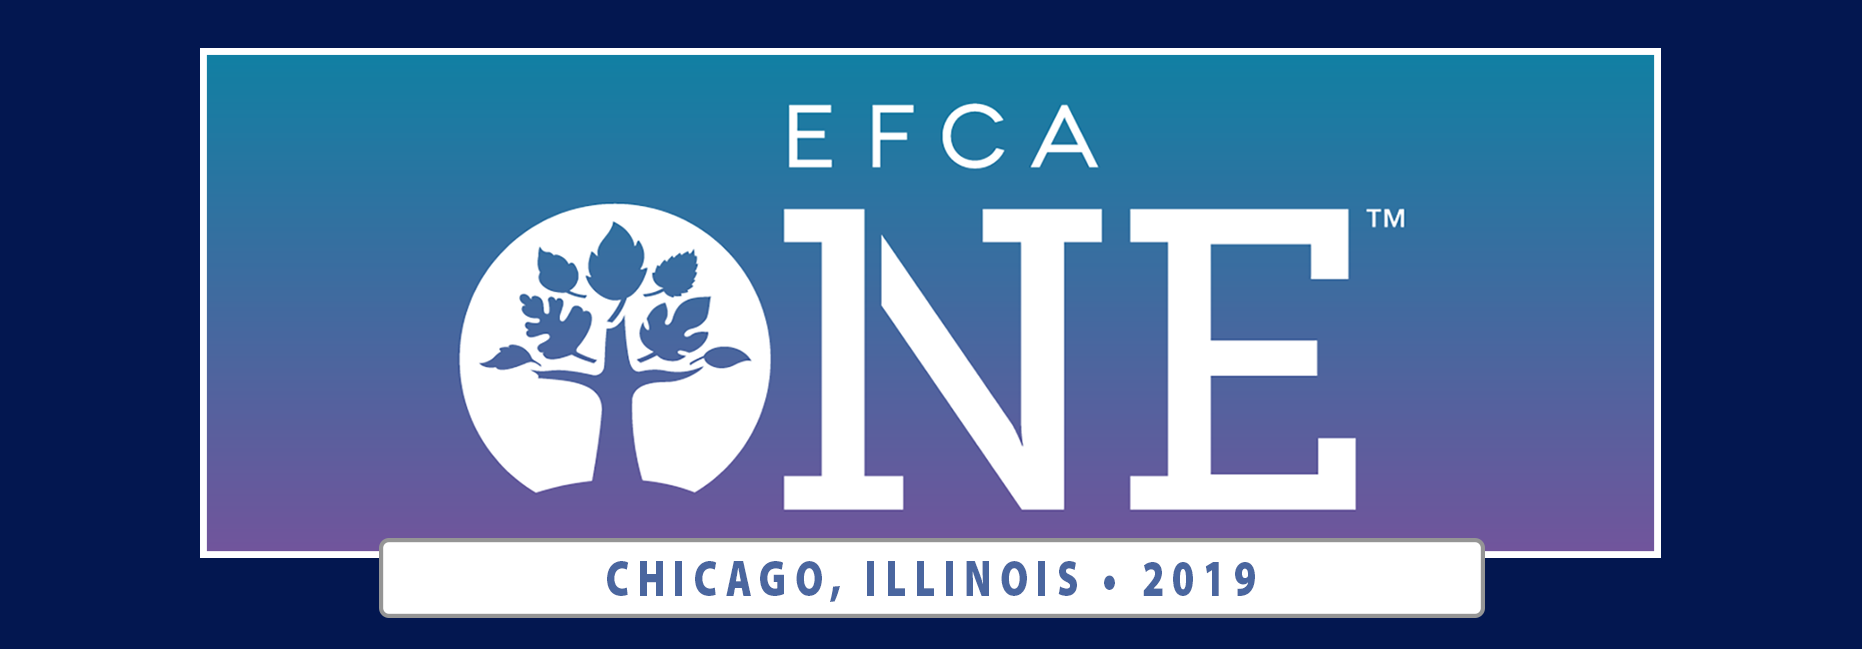 EFCA One 2019 Rock Header (002).png